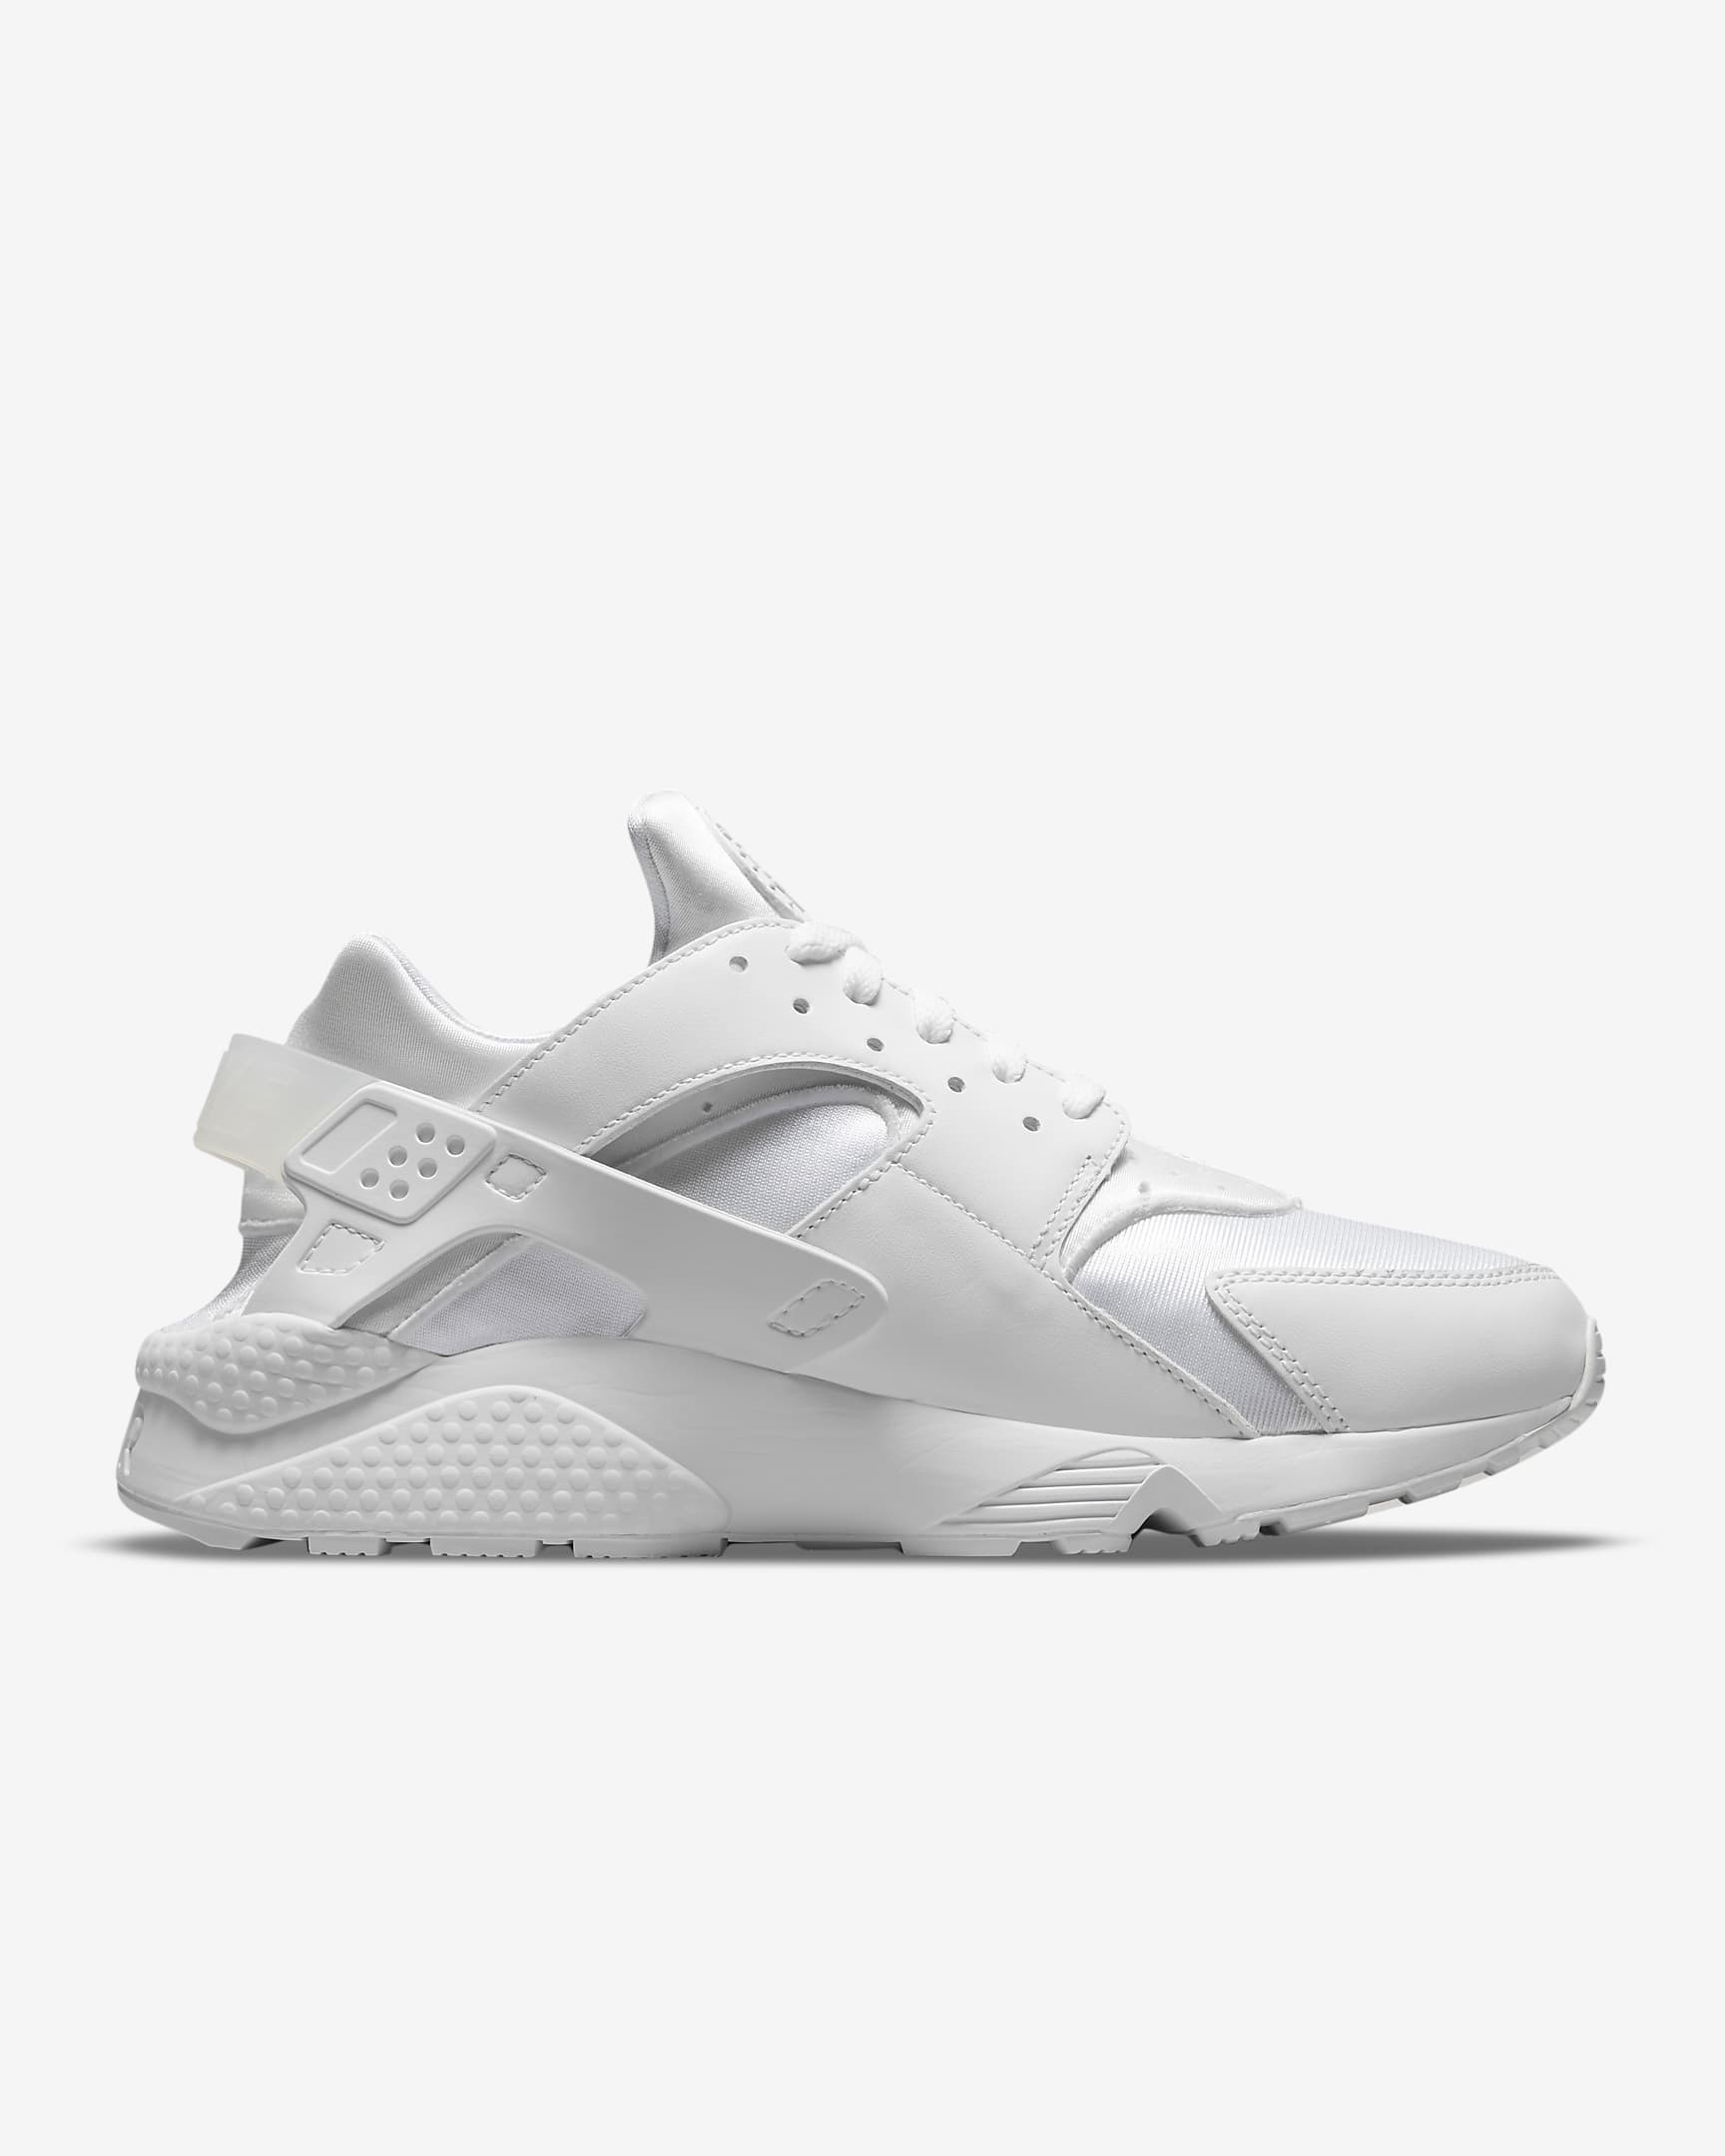 Nike Air Huarache Men's Shoes - White/Pure Platinum